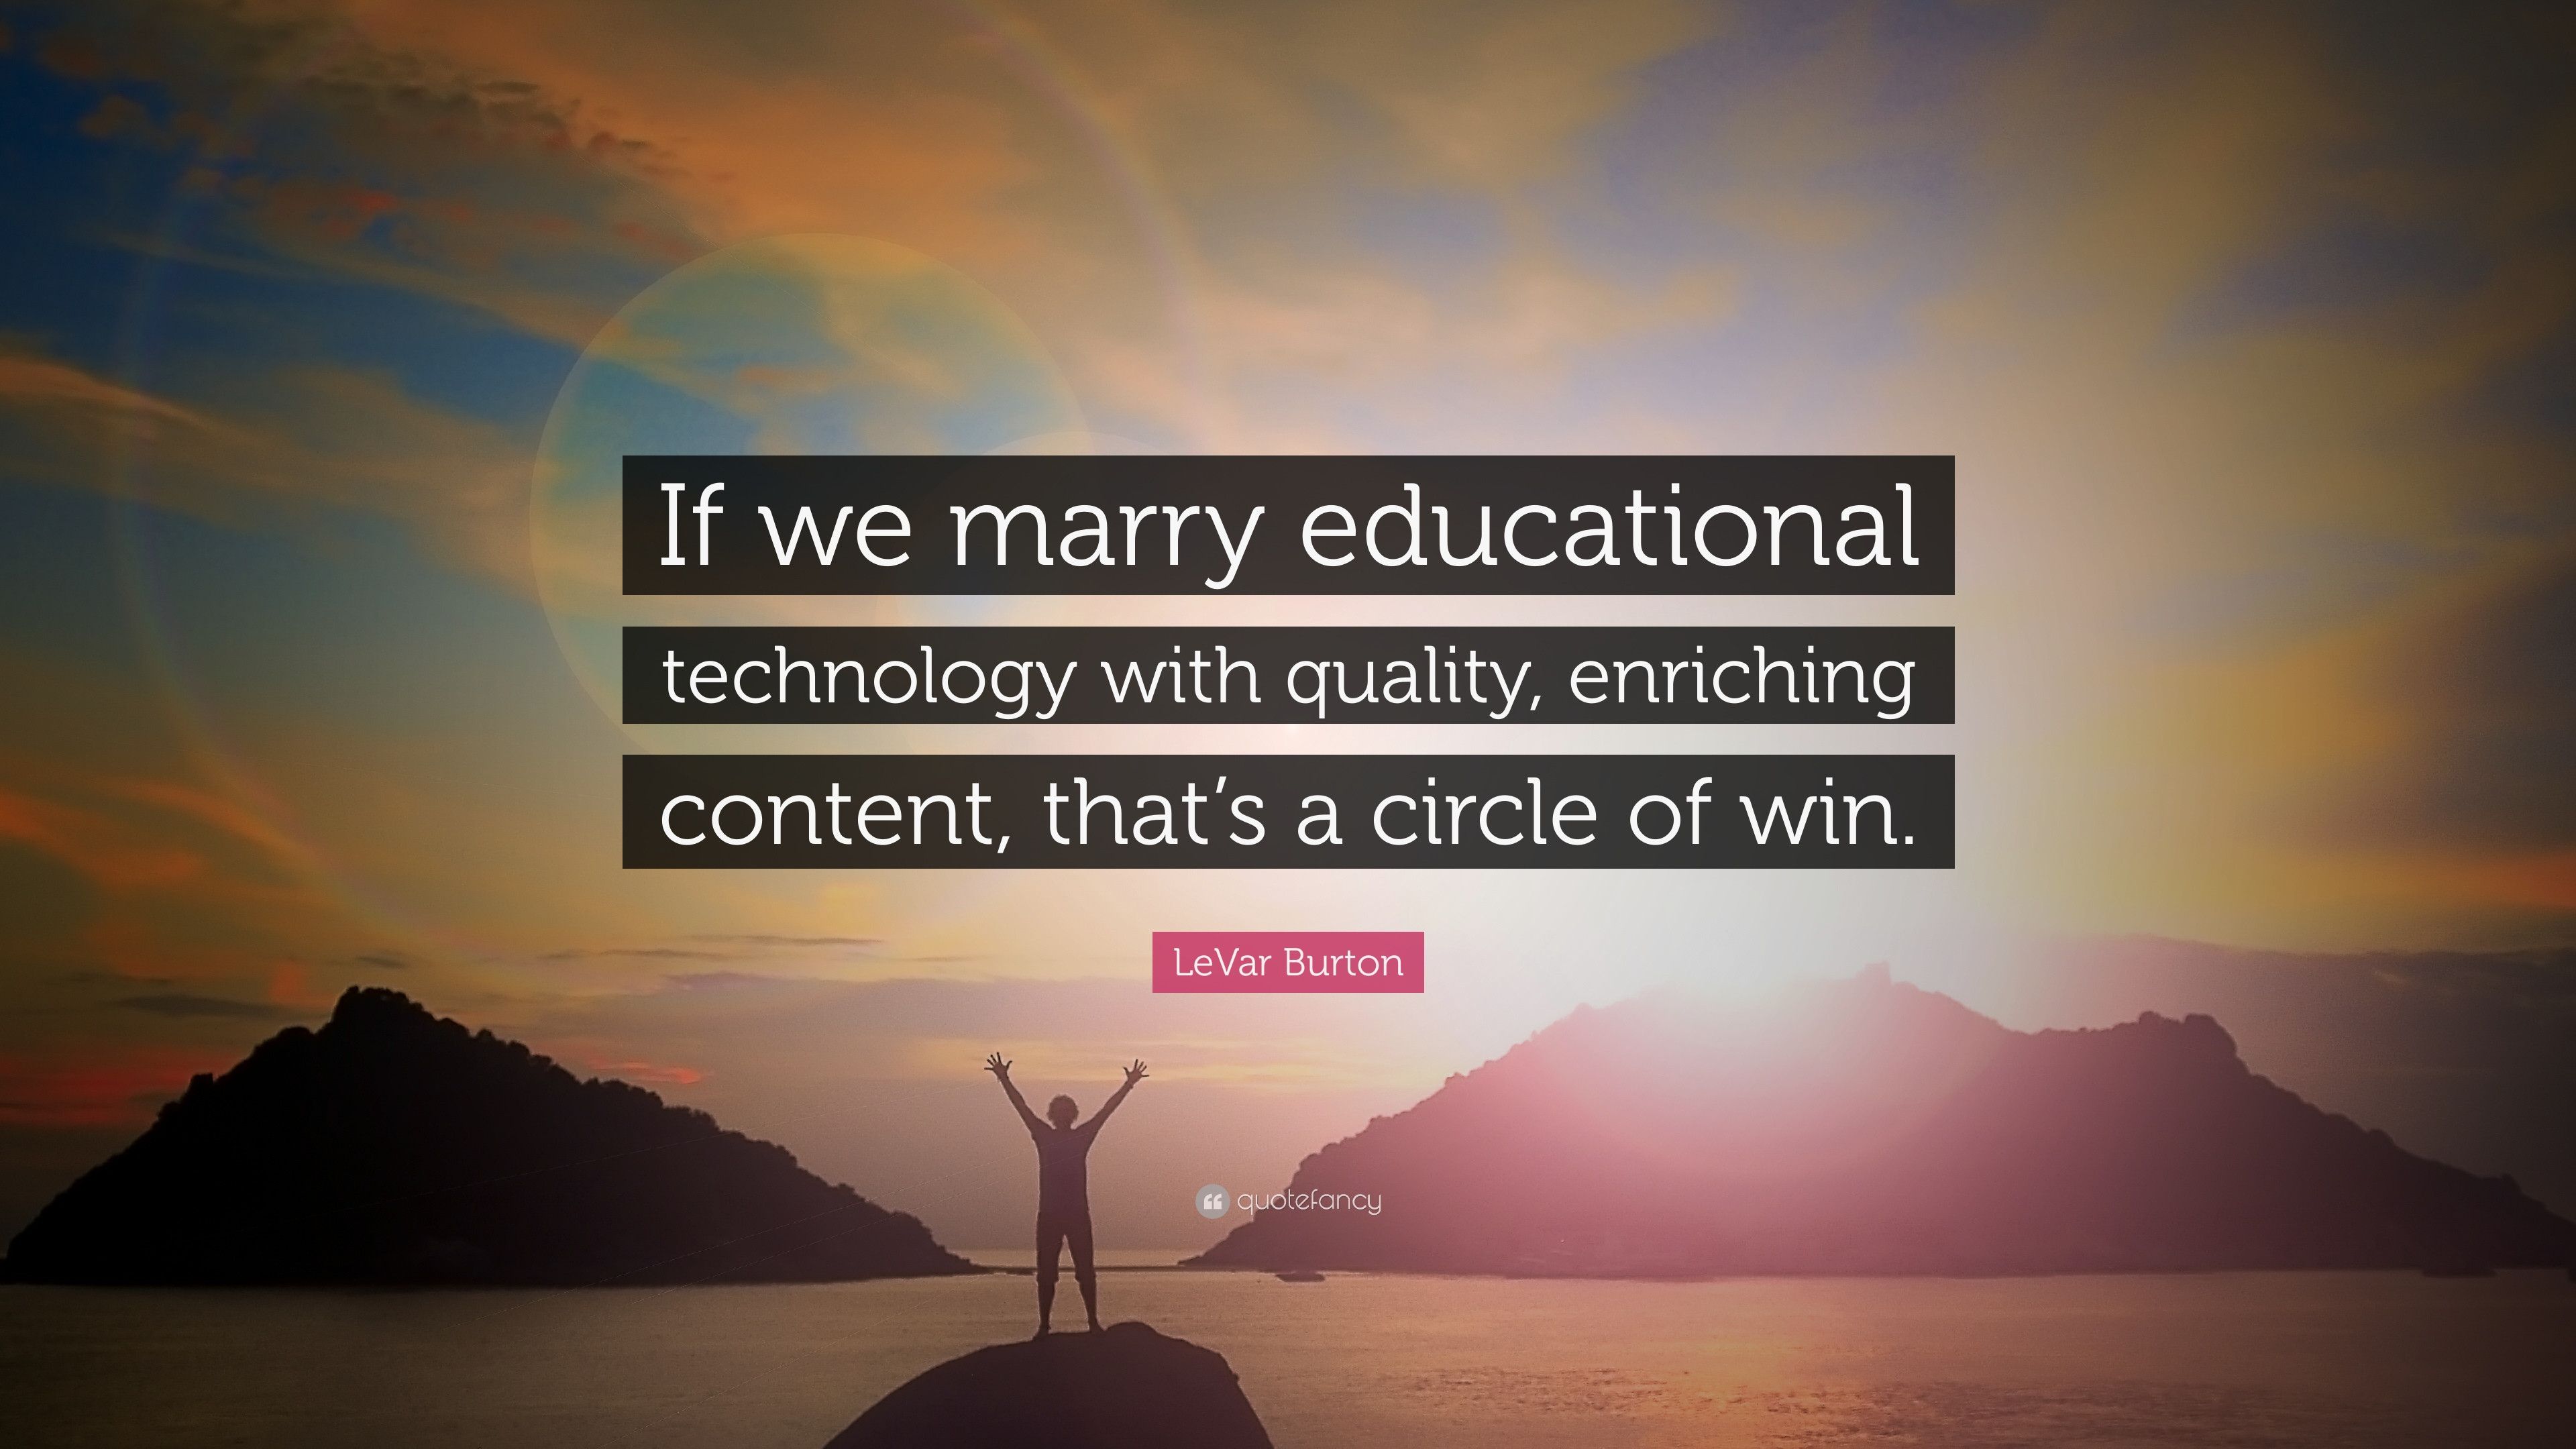 Educational Technology Quotes
 LeVar Burton Quote “If we marry educational technology